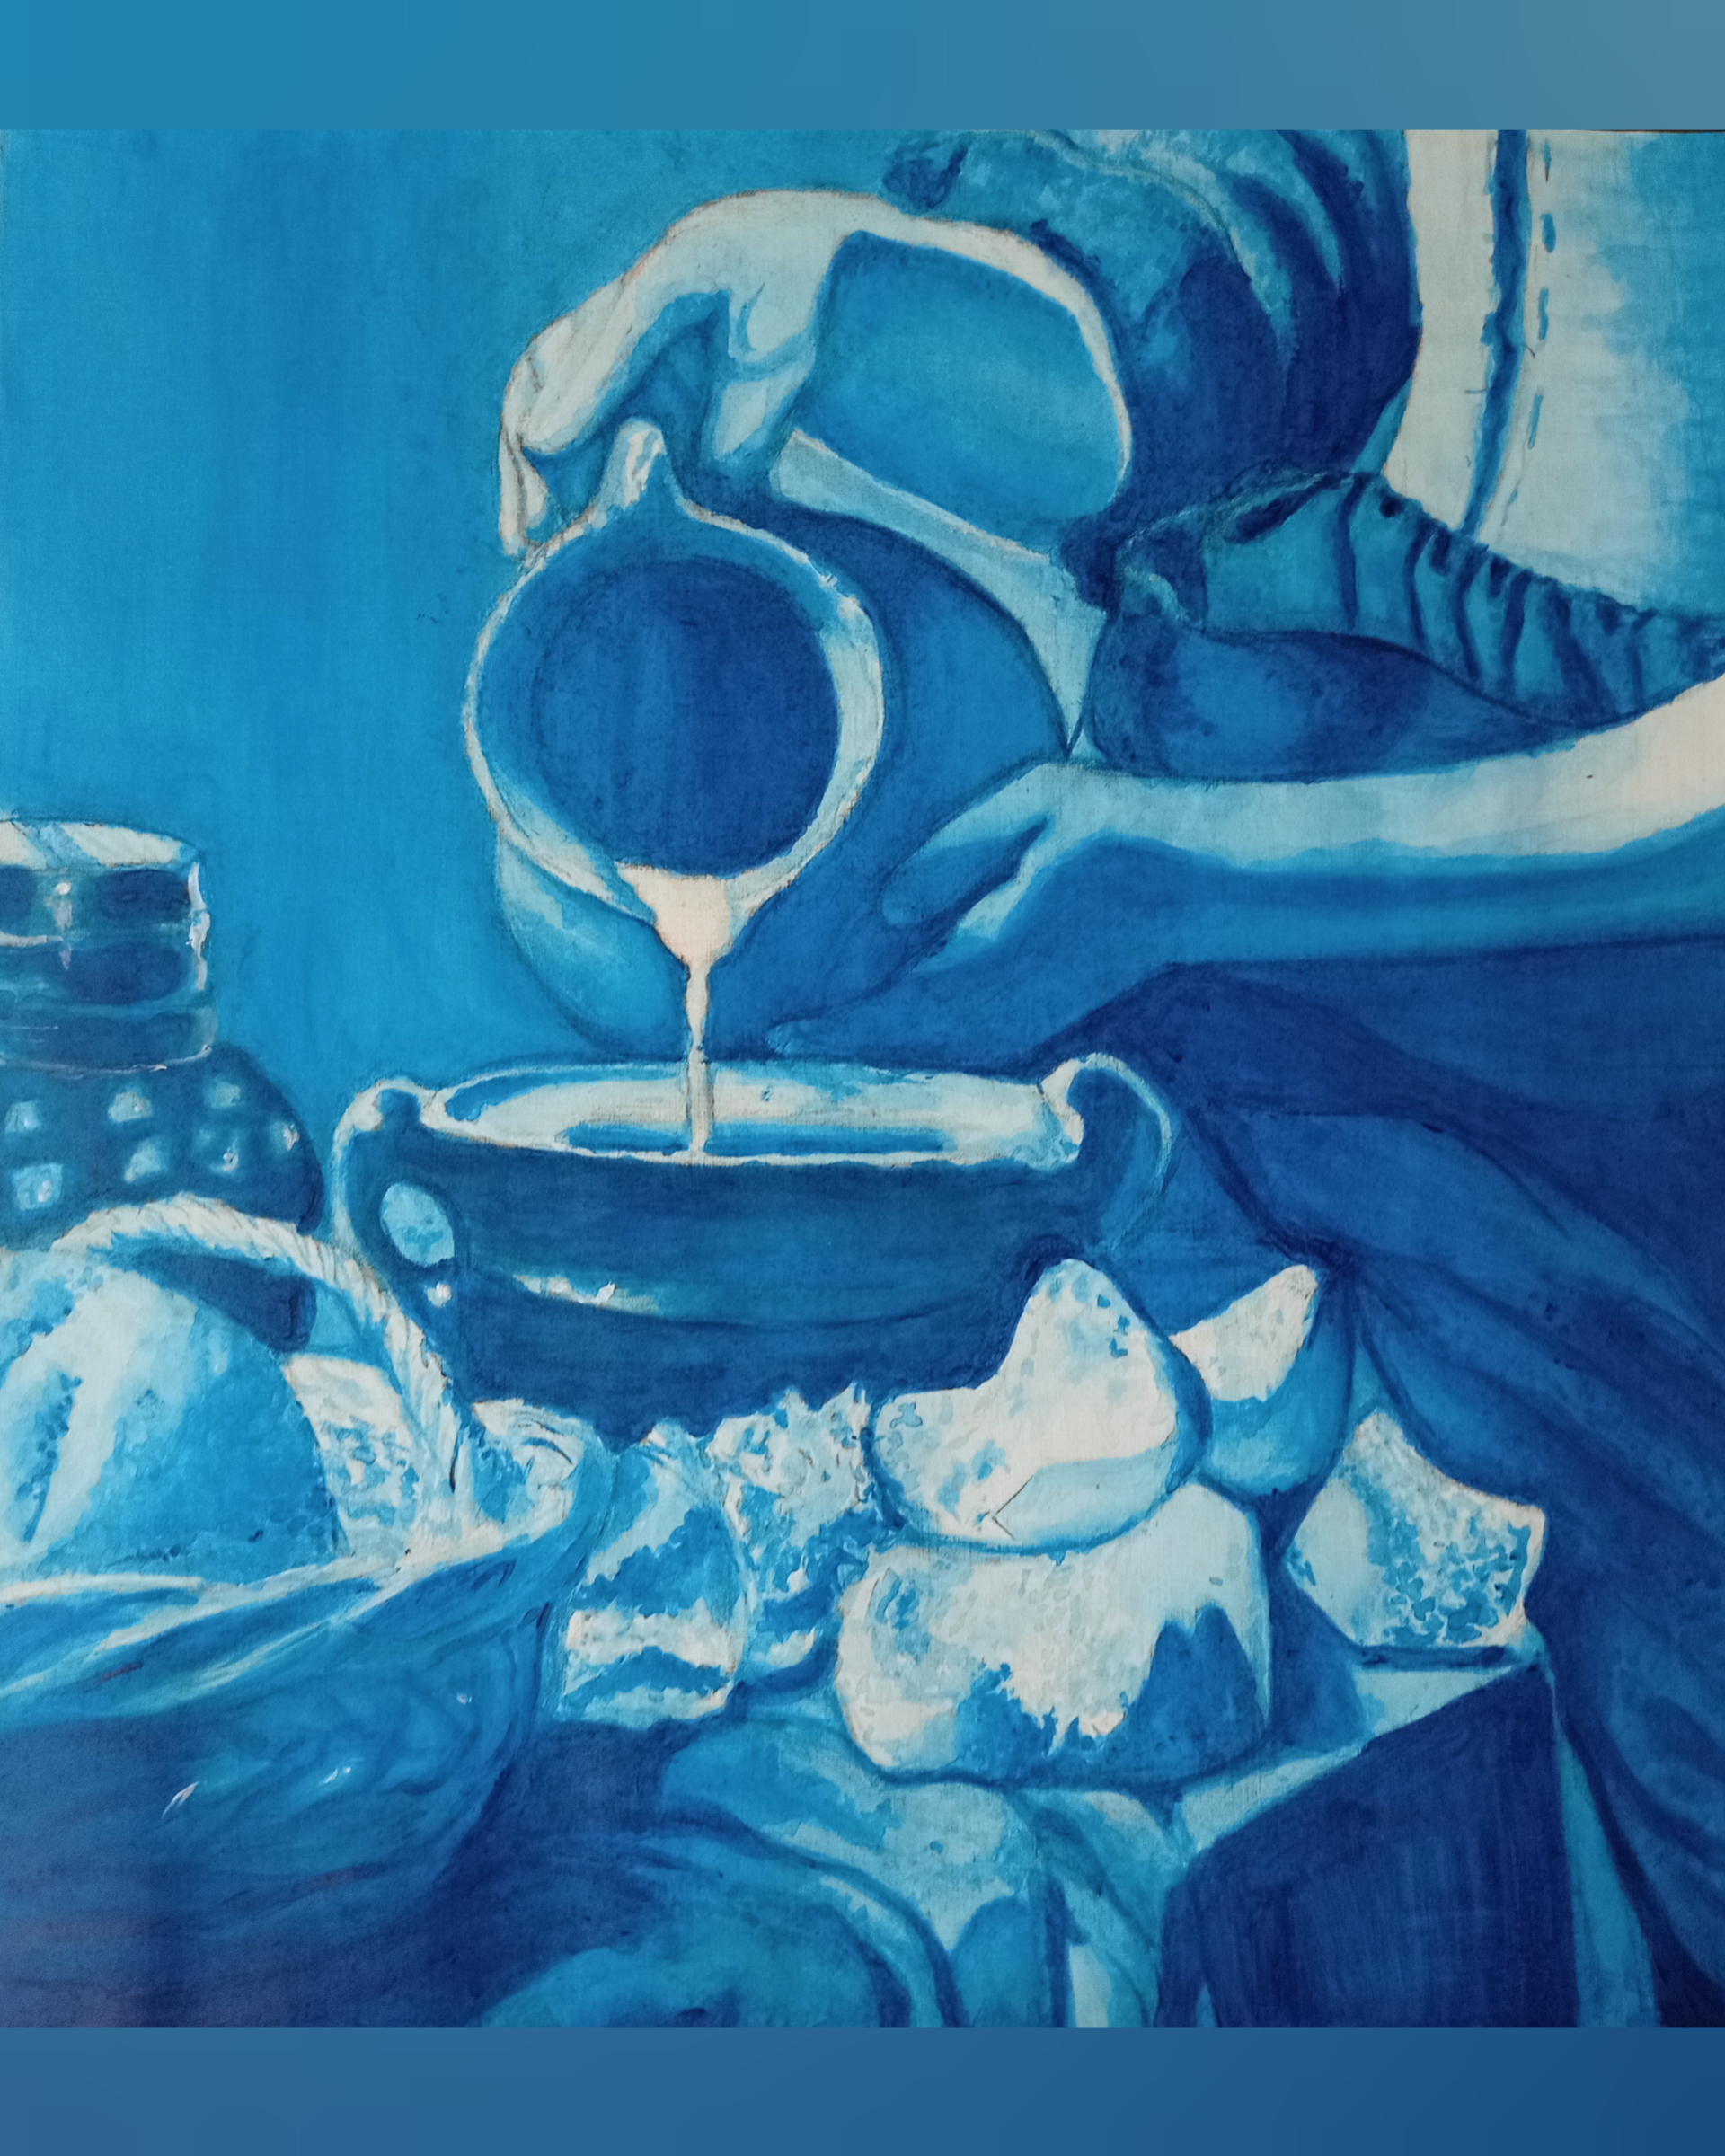 Interprétation libre d'un tableau de Vermeer en nuances de bleu